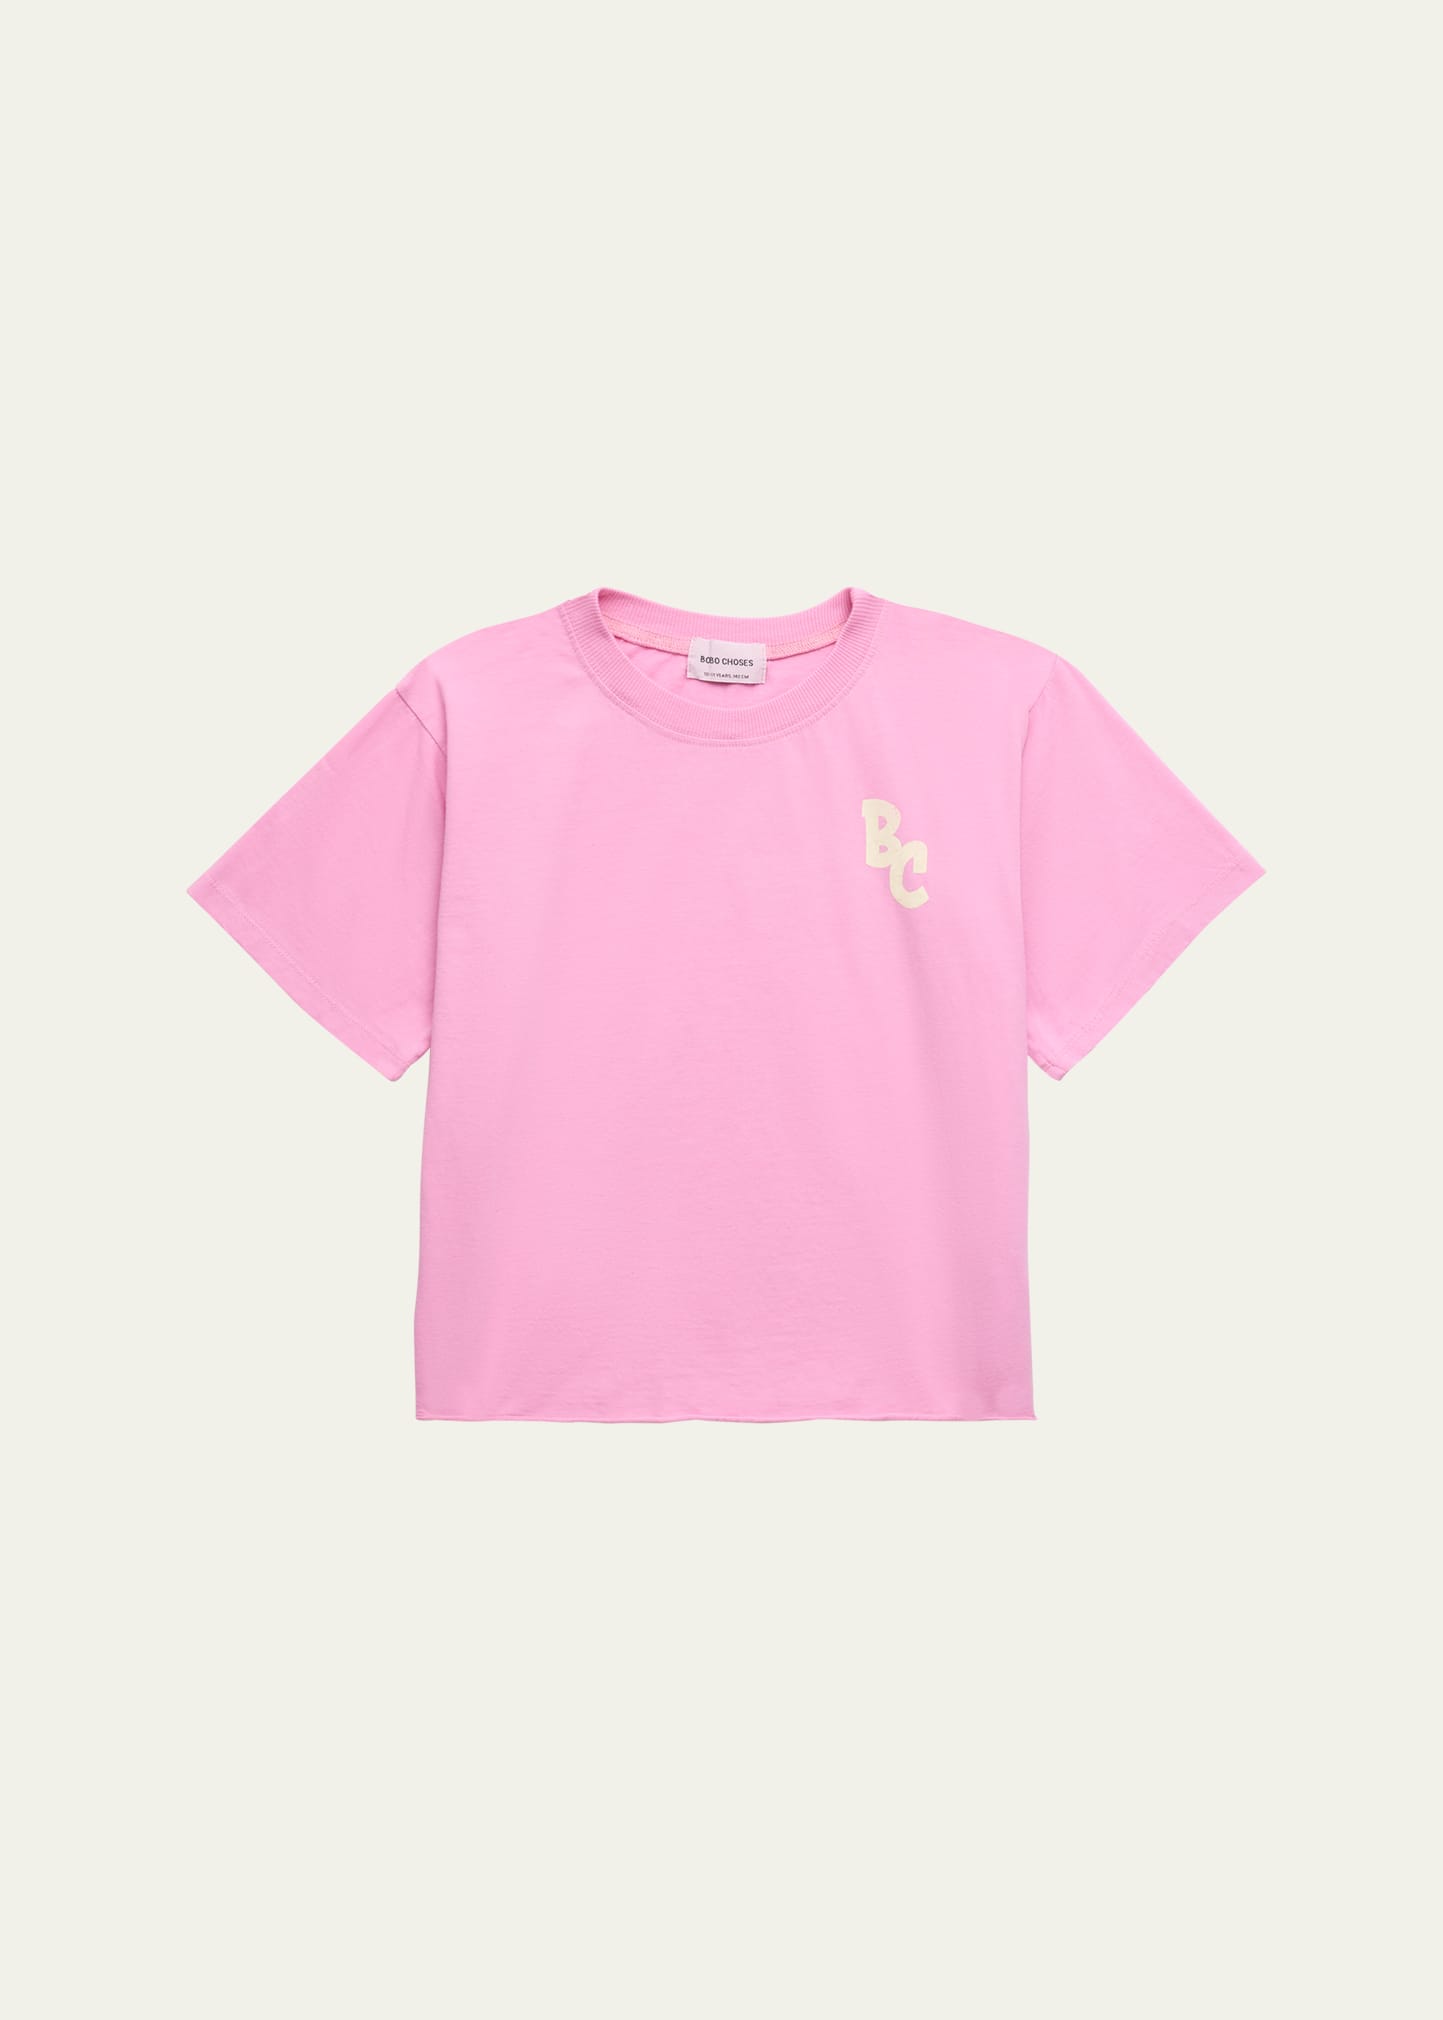 Girl's BC Organic Cotton Short-Sleeve T-Shirt, Size 2-13